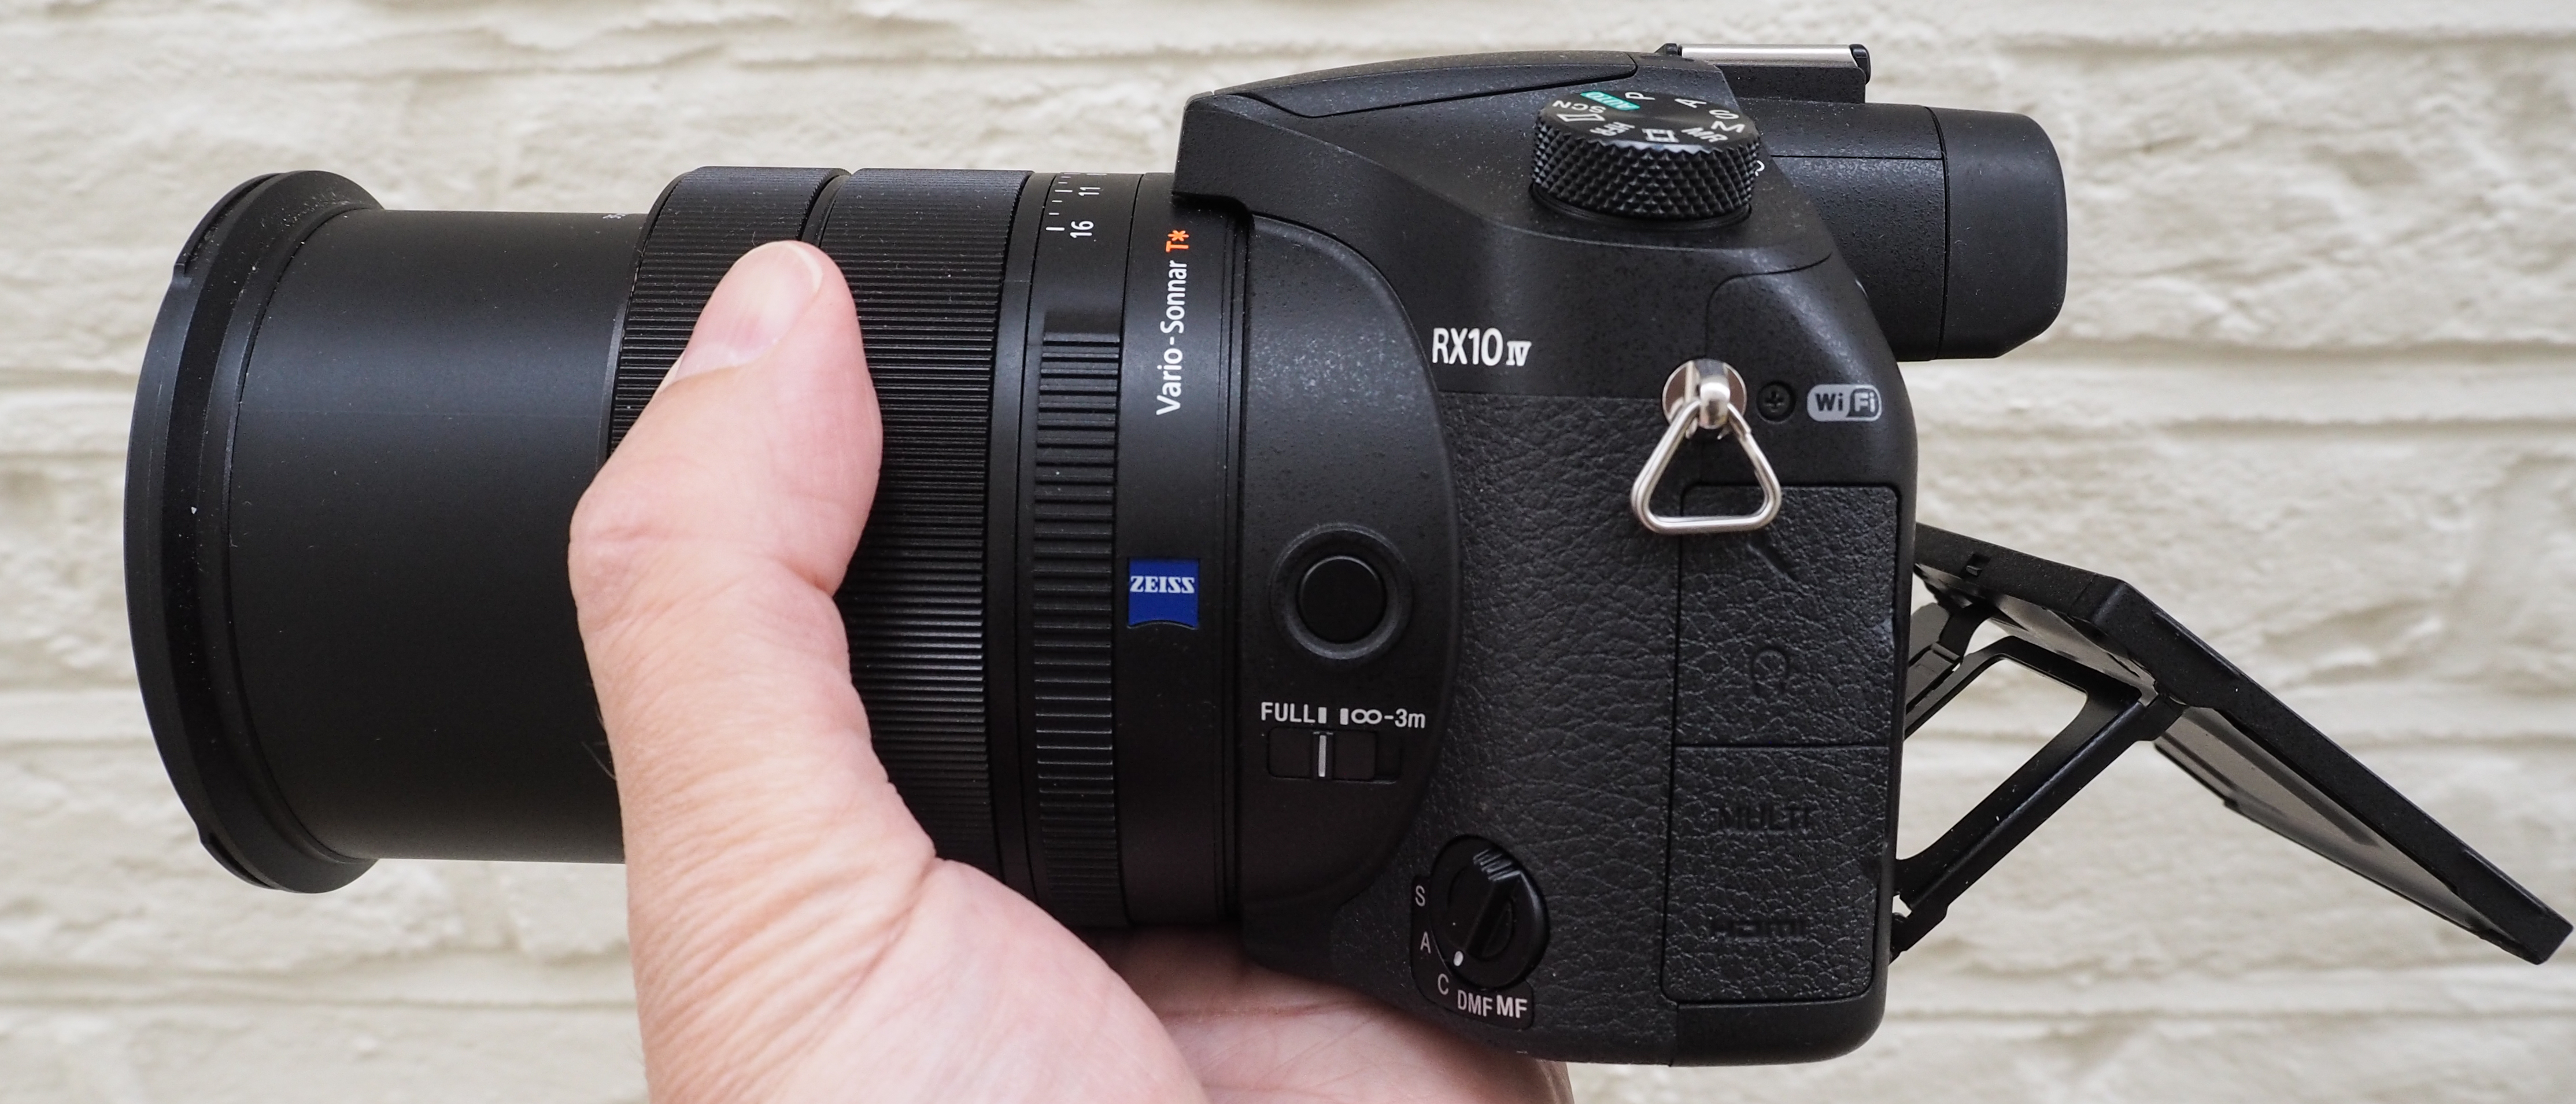 Sony Cyber-shot RX10 IV 20.1-Megapixel Digital Camera Black DSCRX10M4/B -  Best Buy